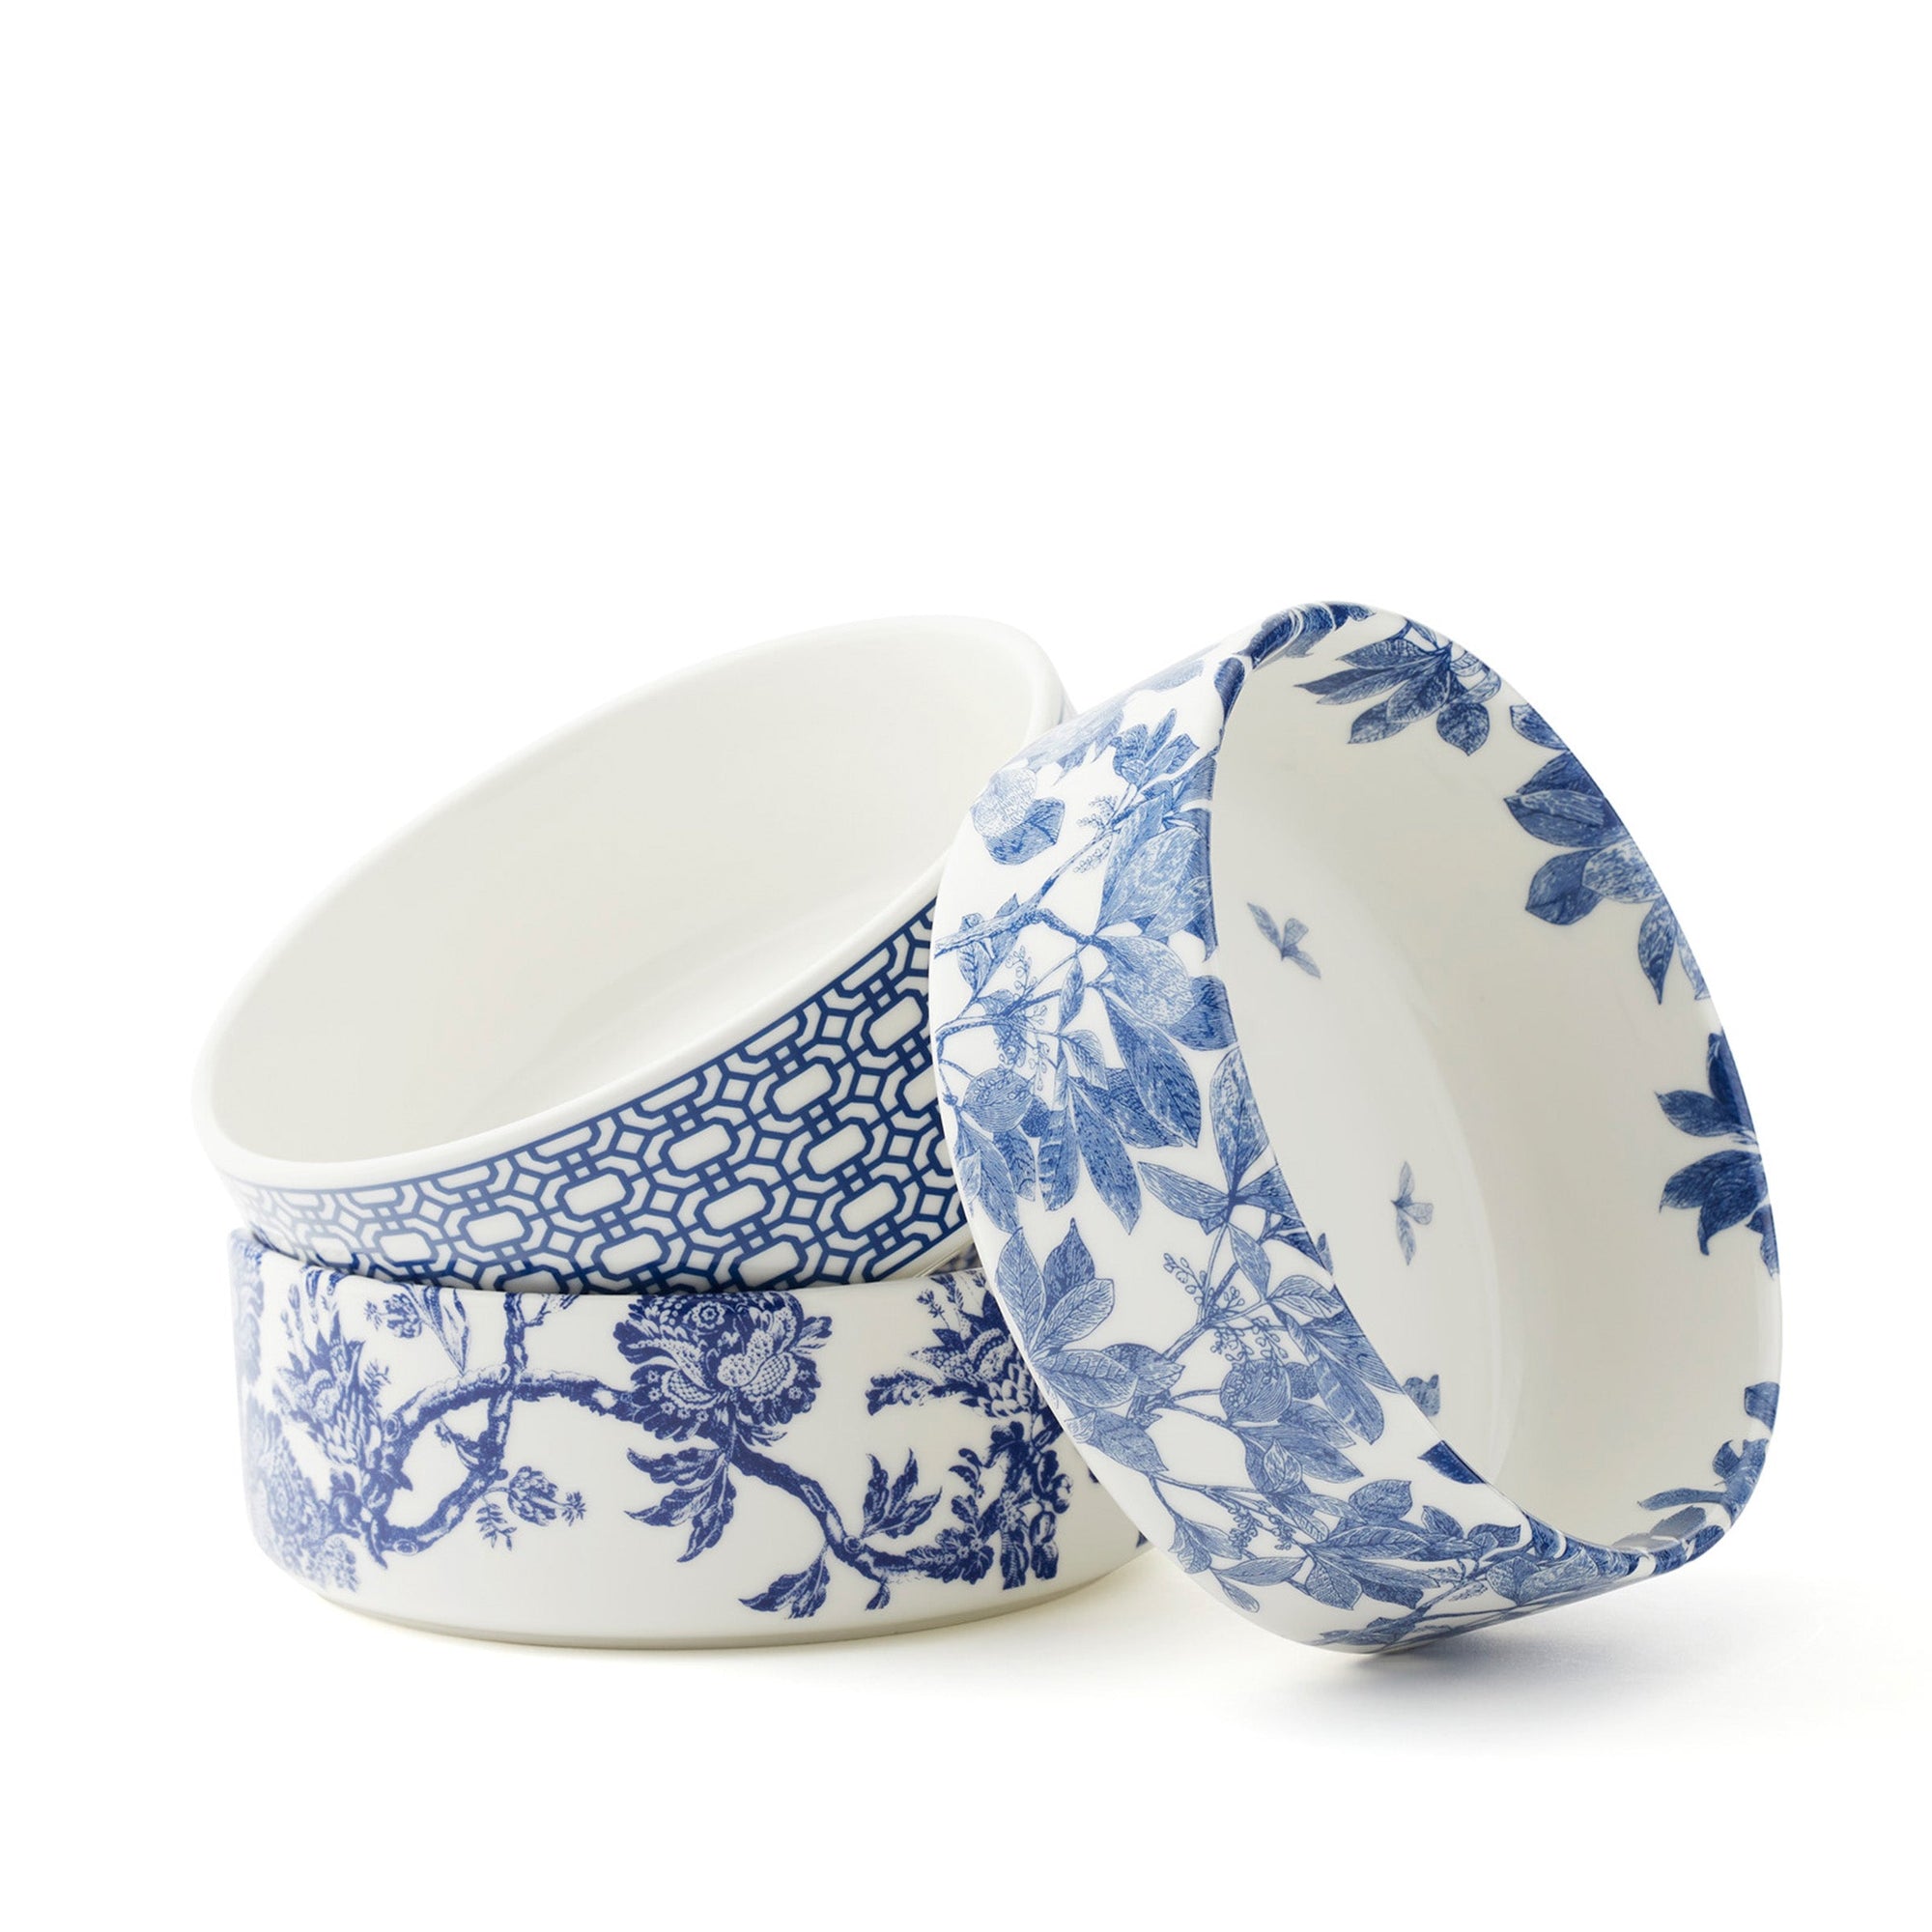 Newport Garden Gate blue and white premium porcelain medium pet bowl from Caskata.